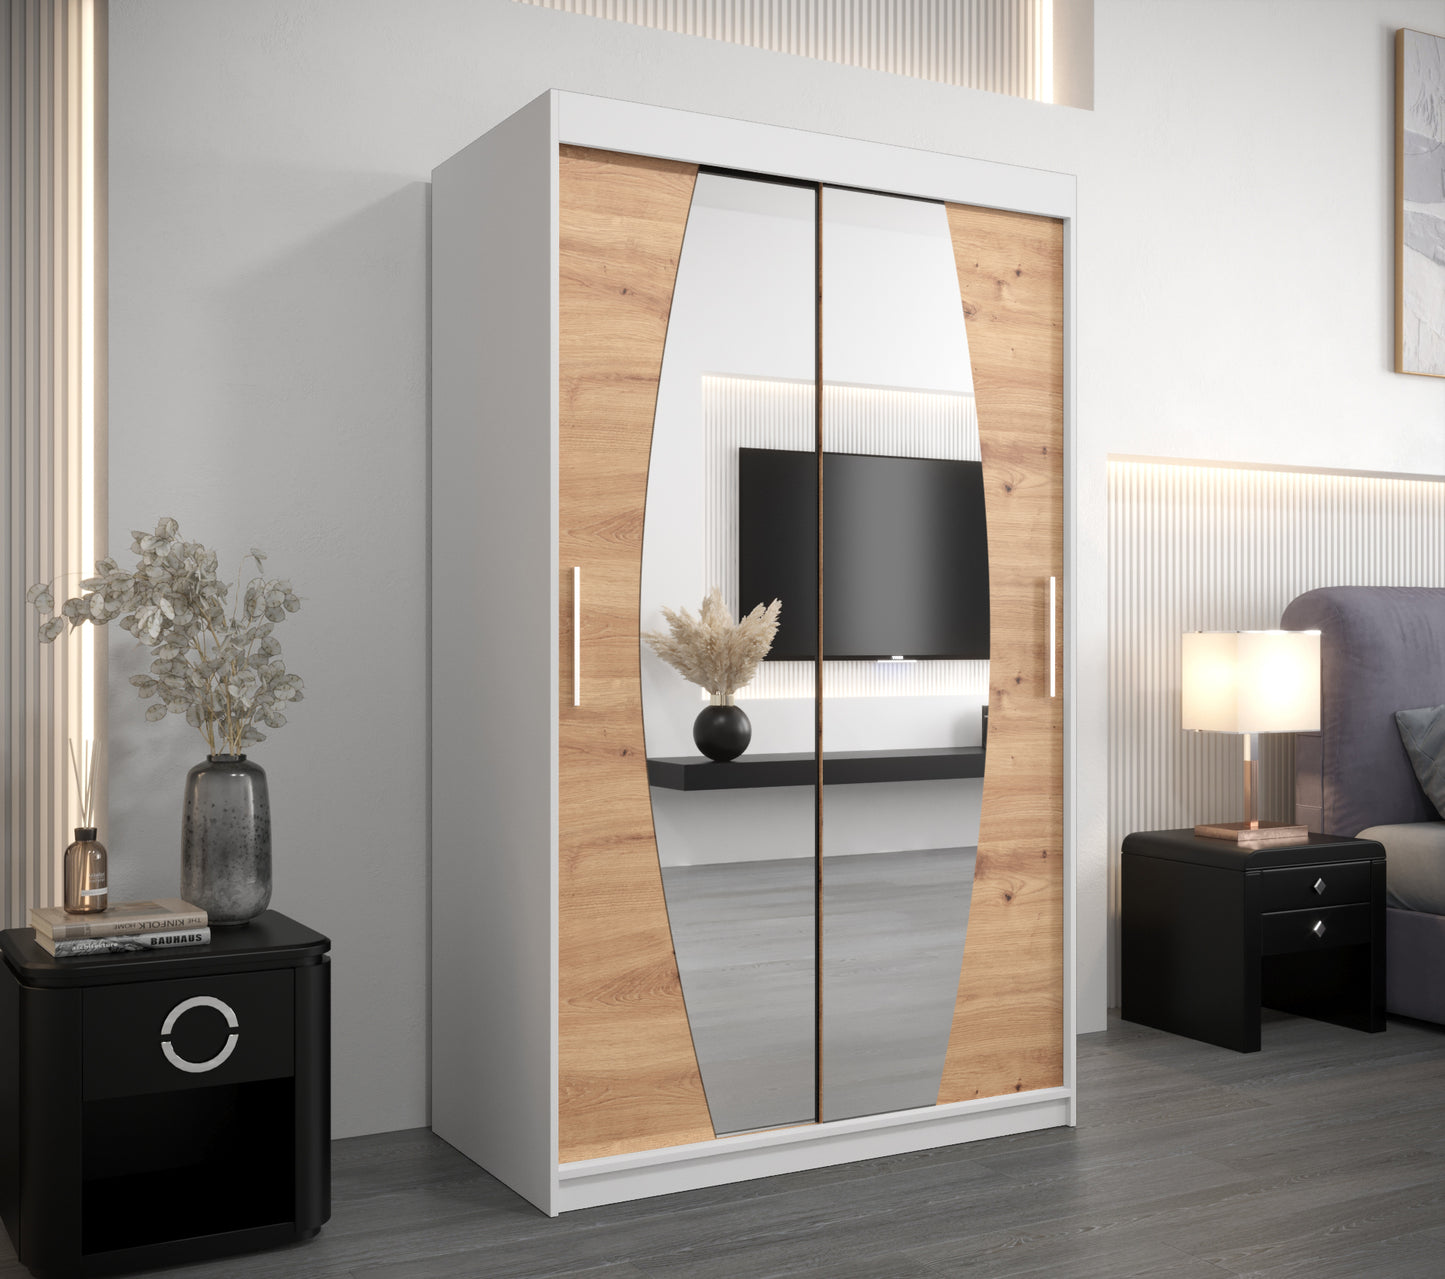 ECLIPTO - Wardrobe Sliding Doors Mirrors Colour Combinations Drawers Optional >120cm x 200cm<